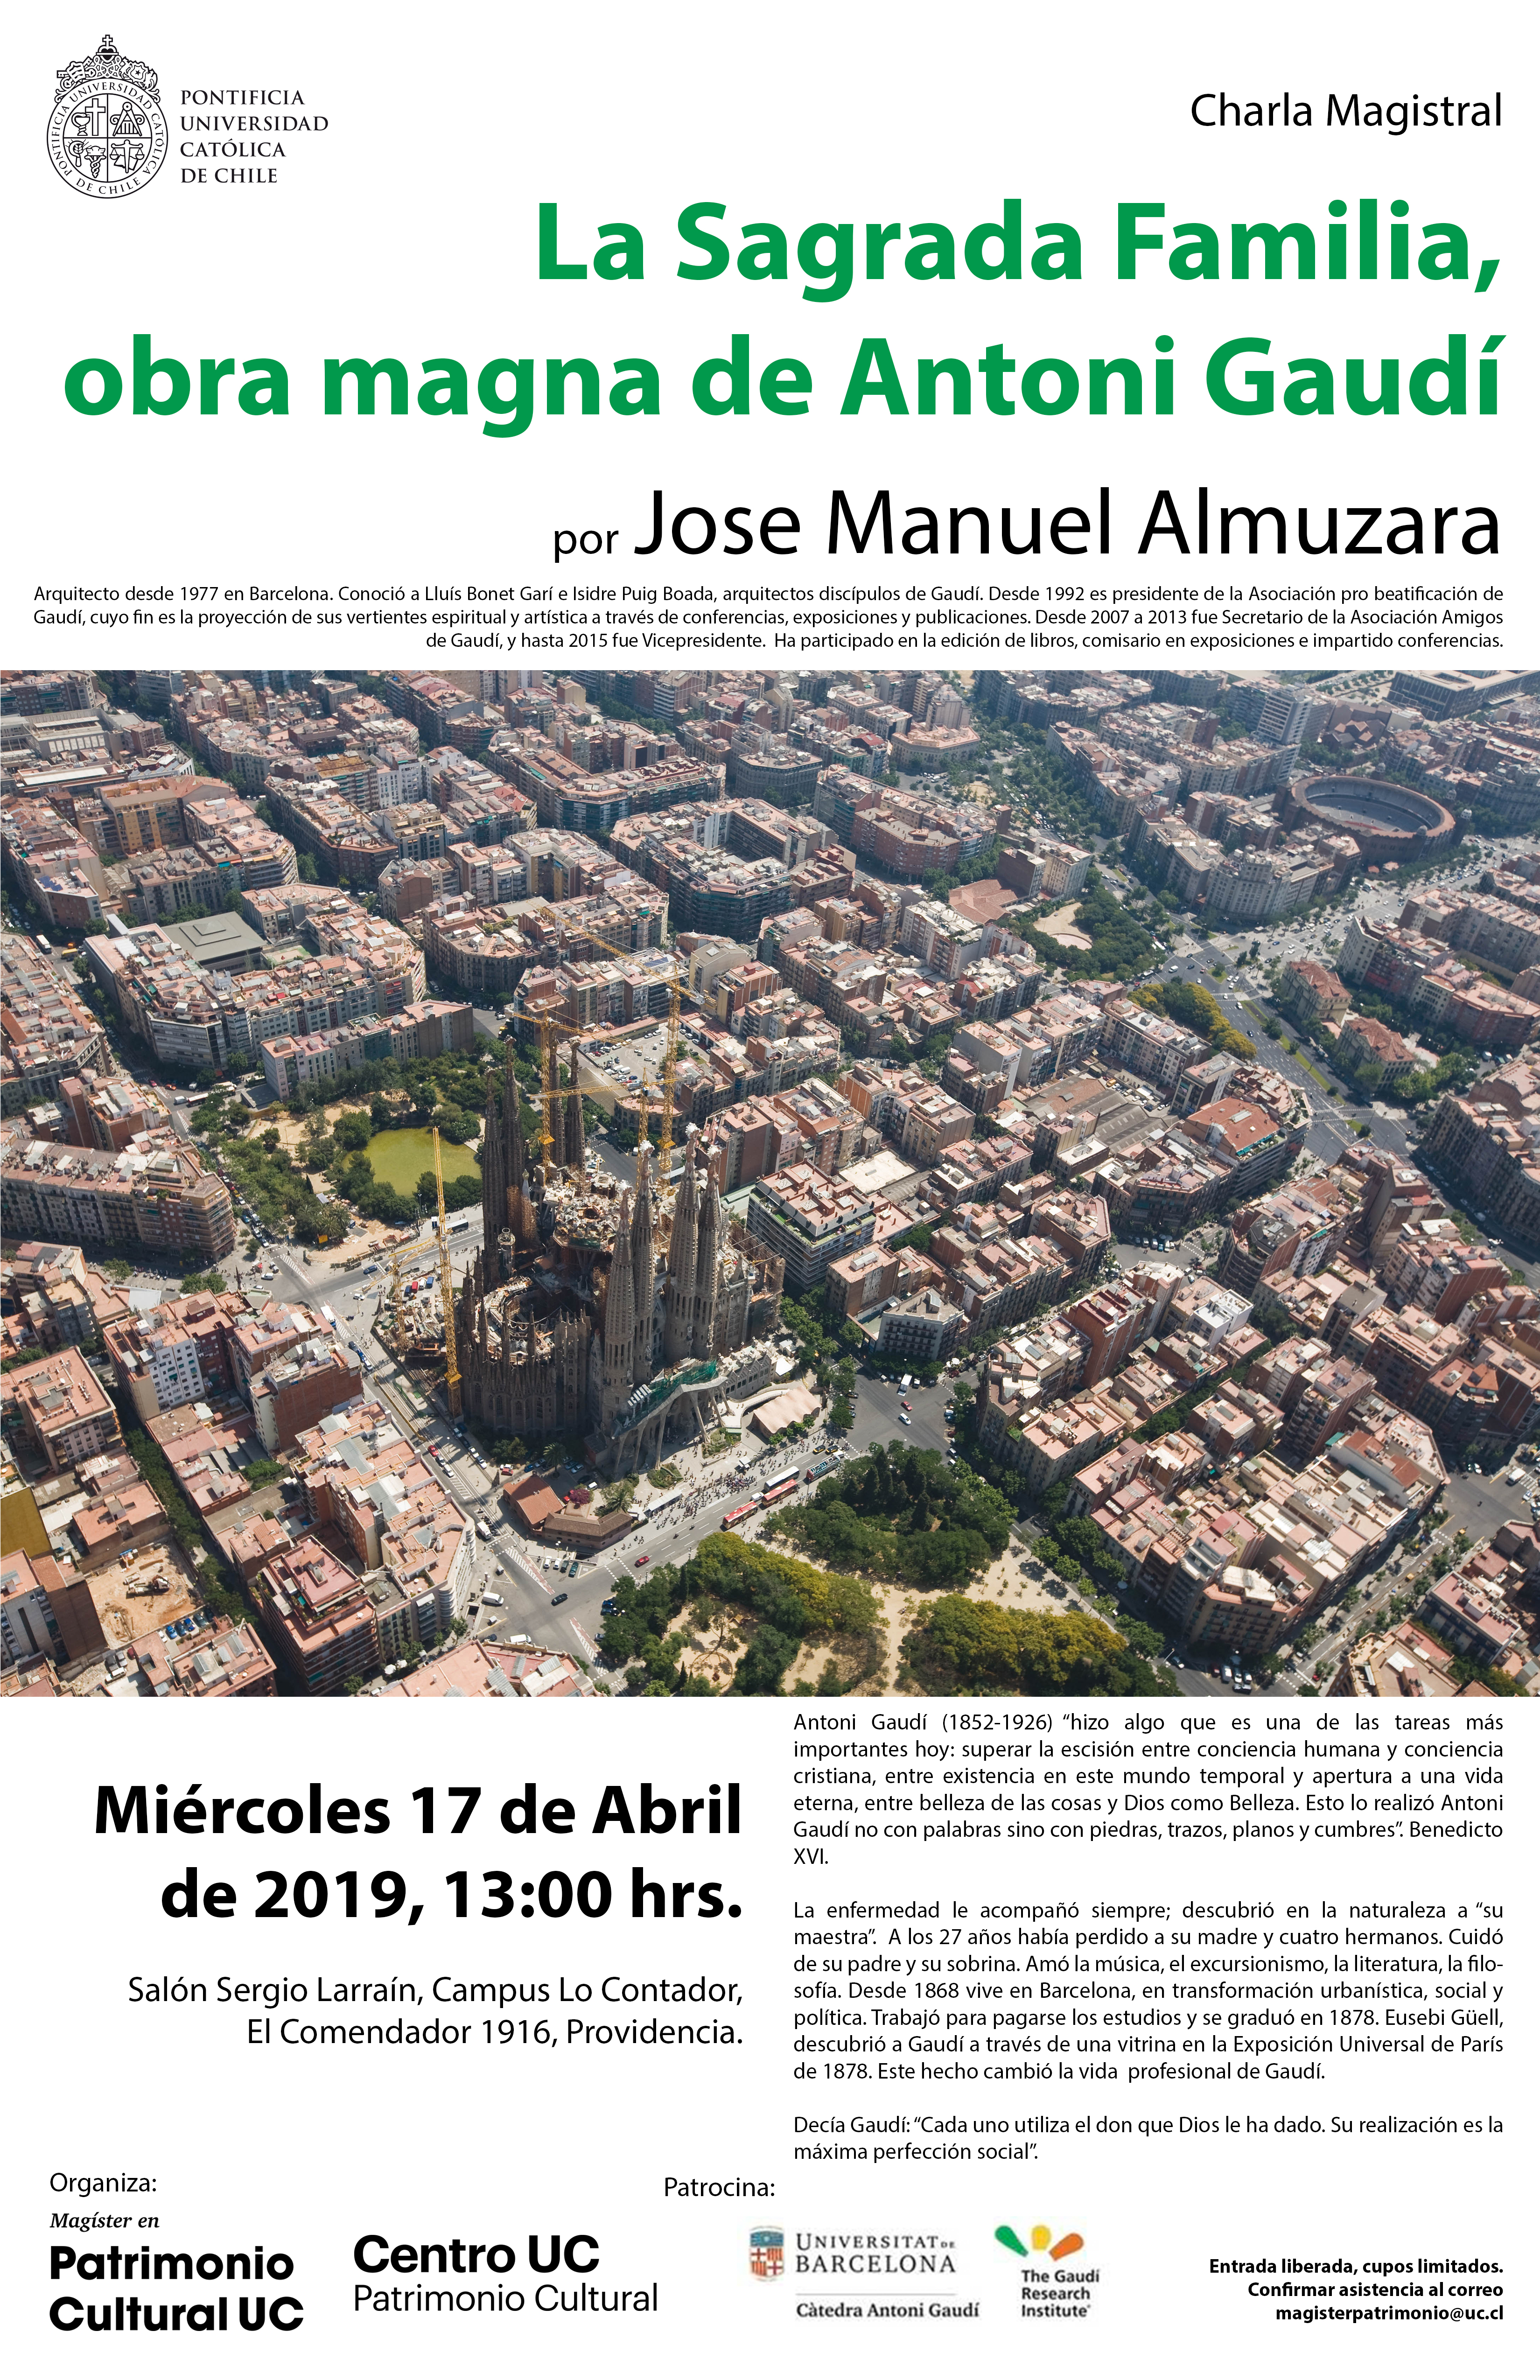 19-04-17_ABR_17_Charla_magistral_La_Sagrada_Familia_obra_magna_de_Antoni_Gaudi_Jose_Manuel_Almuzara_afiche.jpg